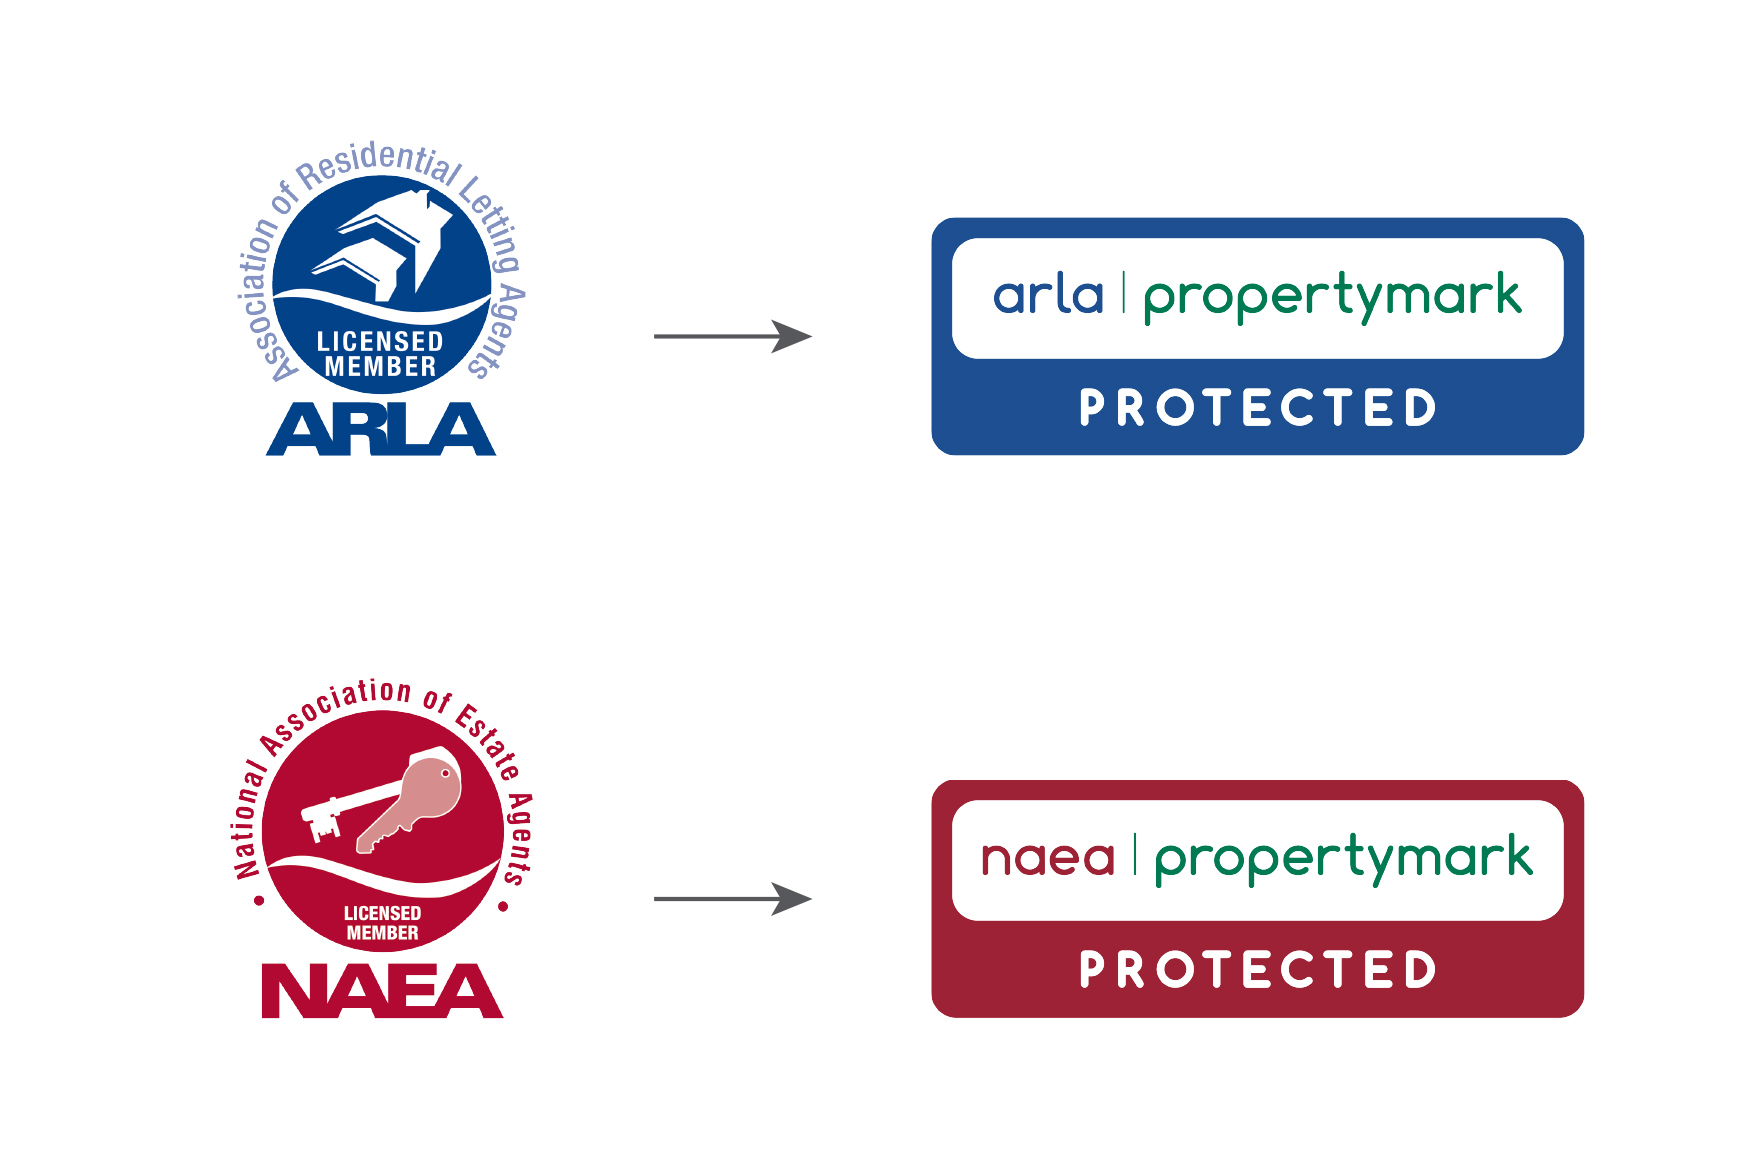 ARLA and NAEA rebrand to ARLA Propertymark and NAEA Propertymark